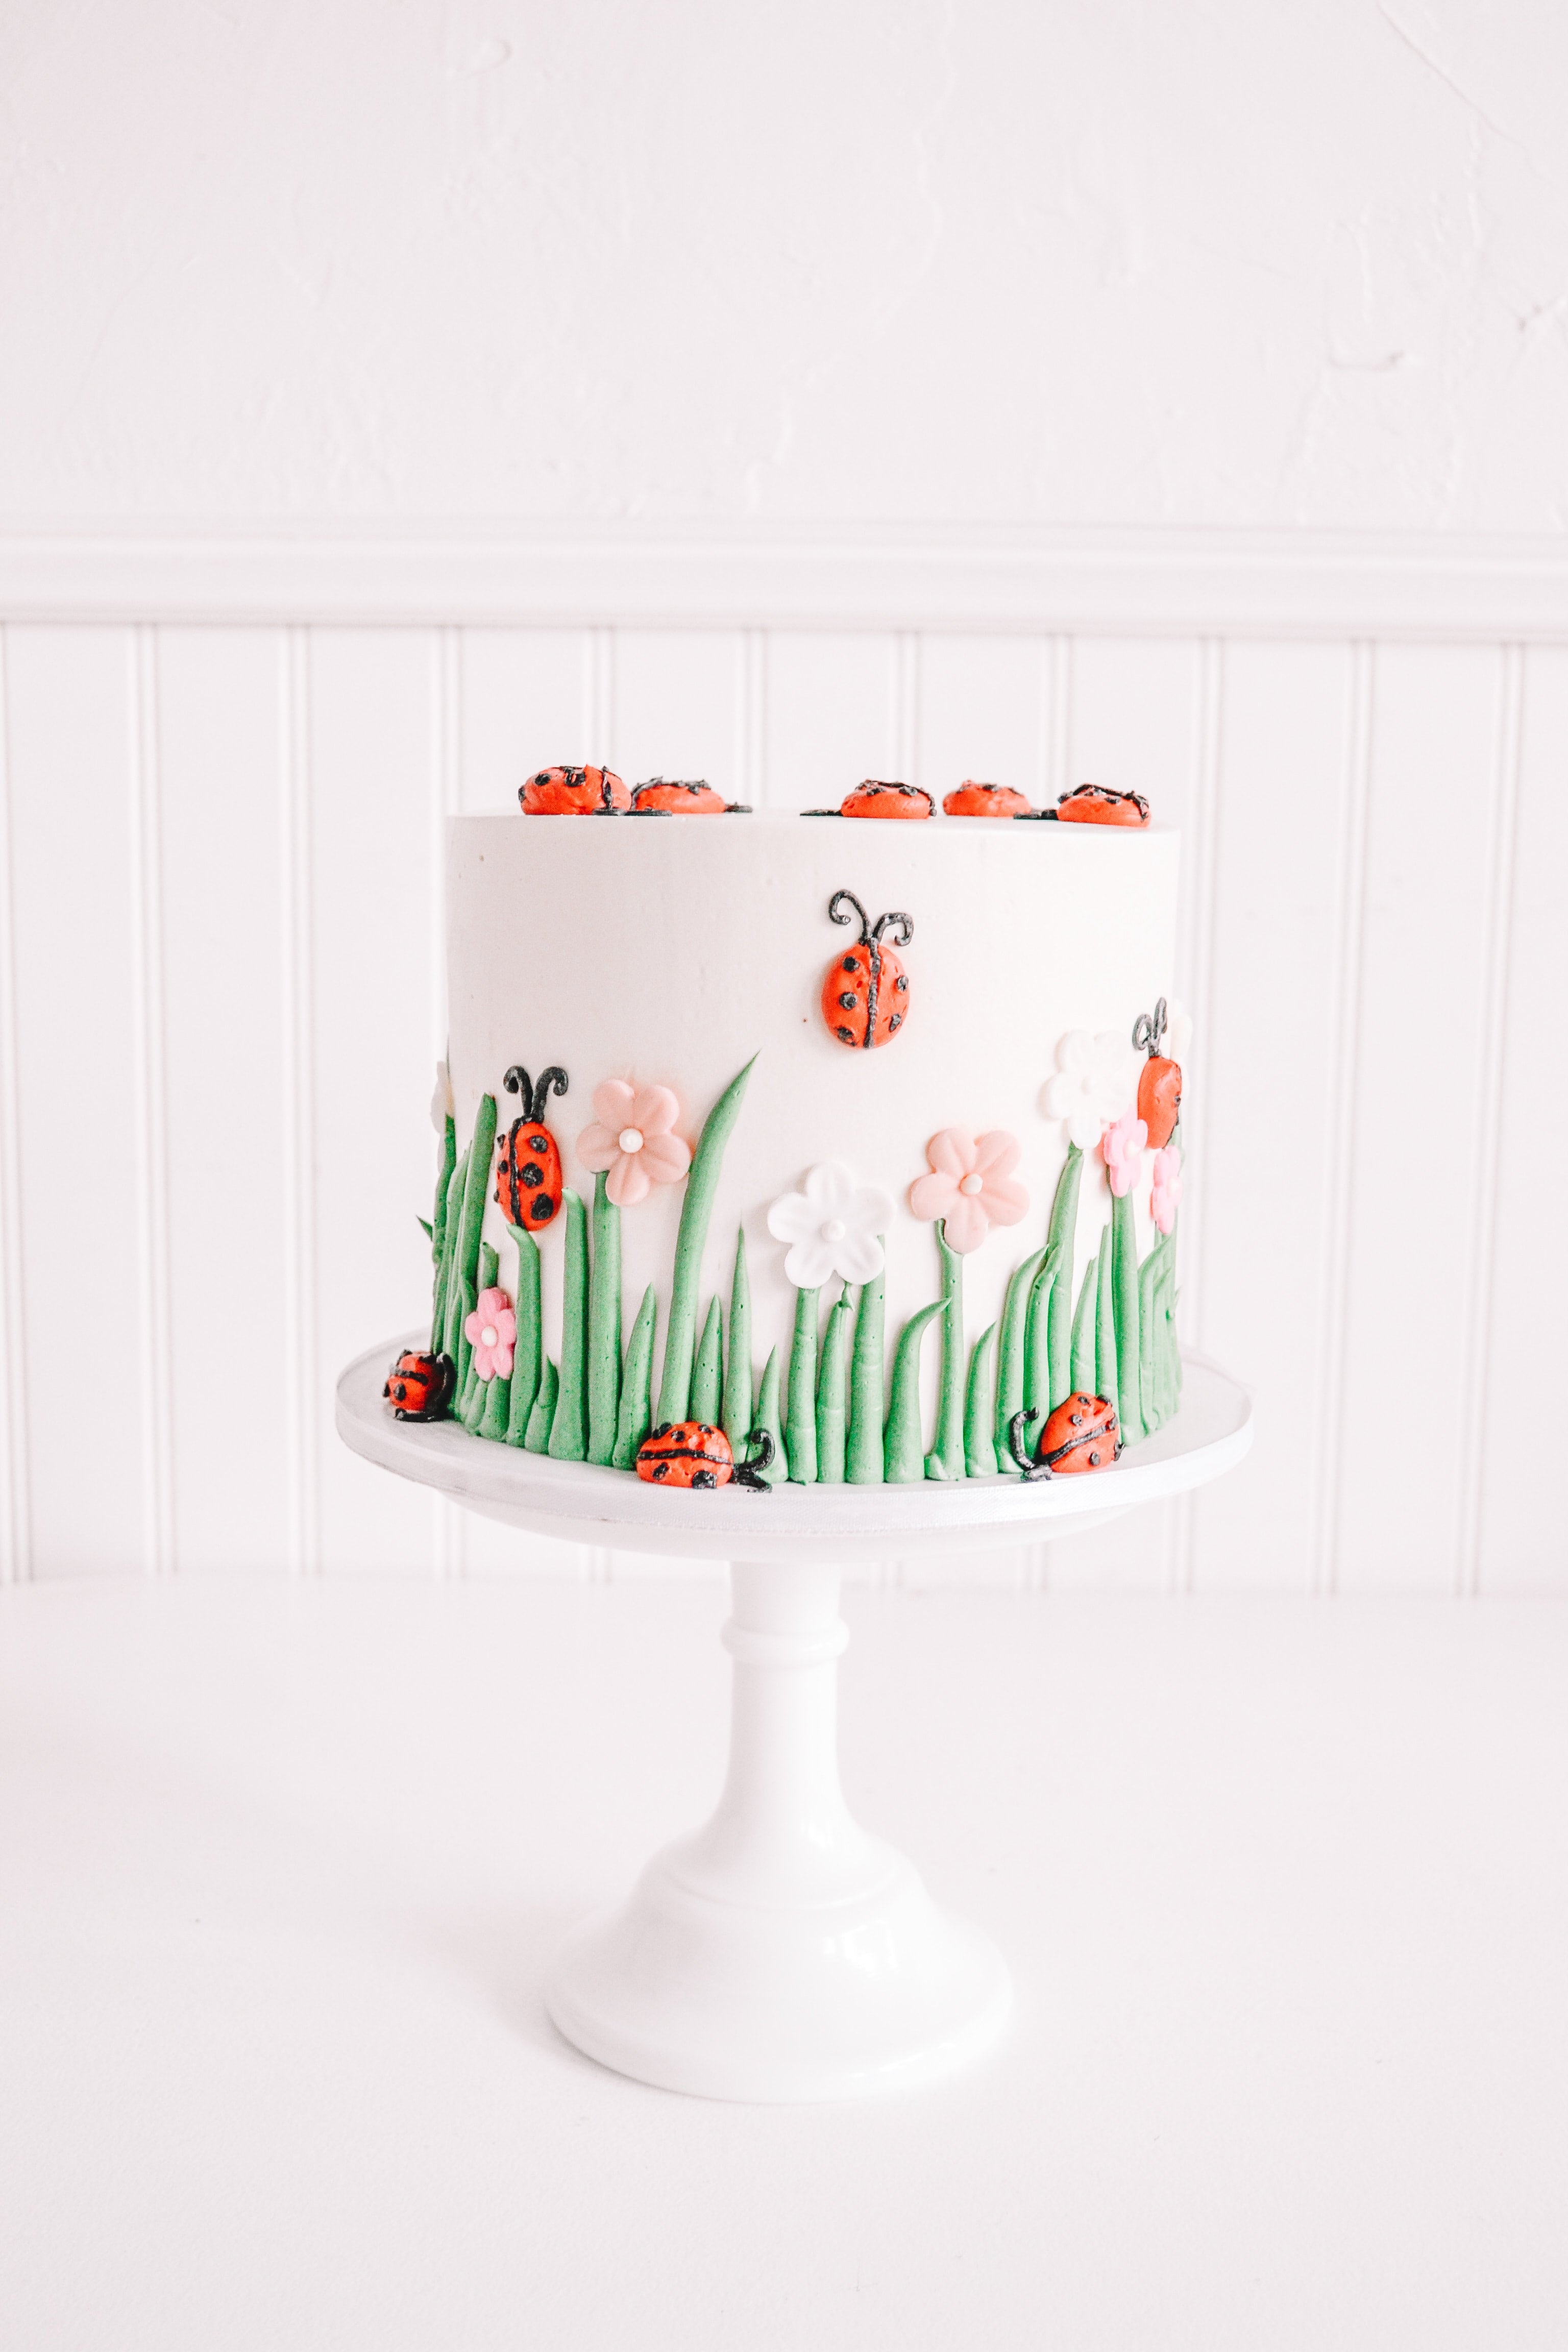 Ladybug Cake - The Perfect Cake for Spring